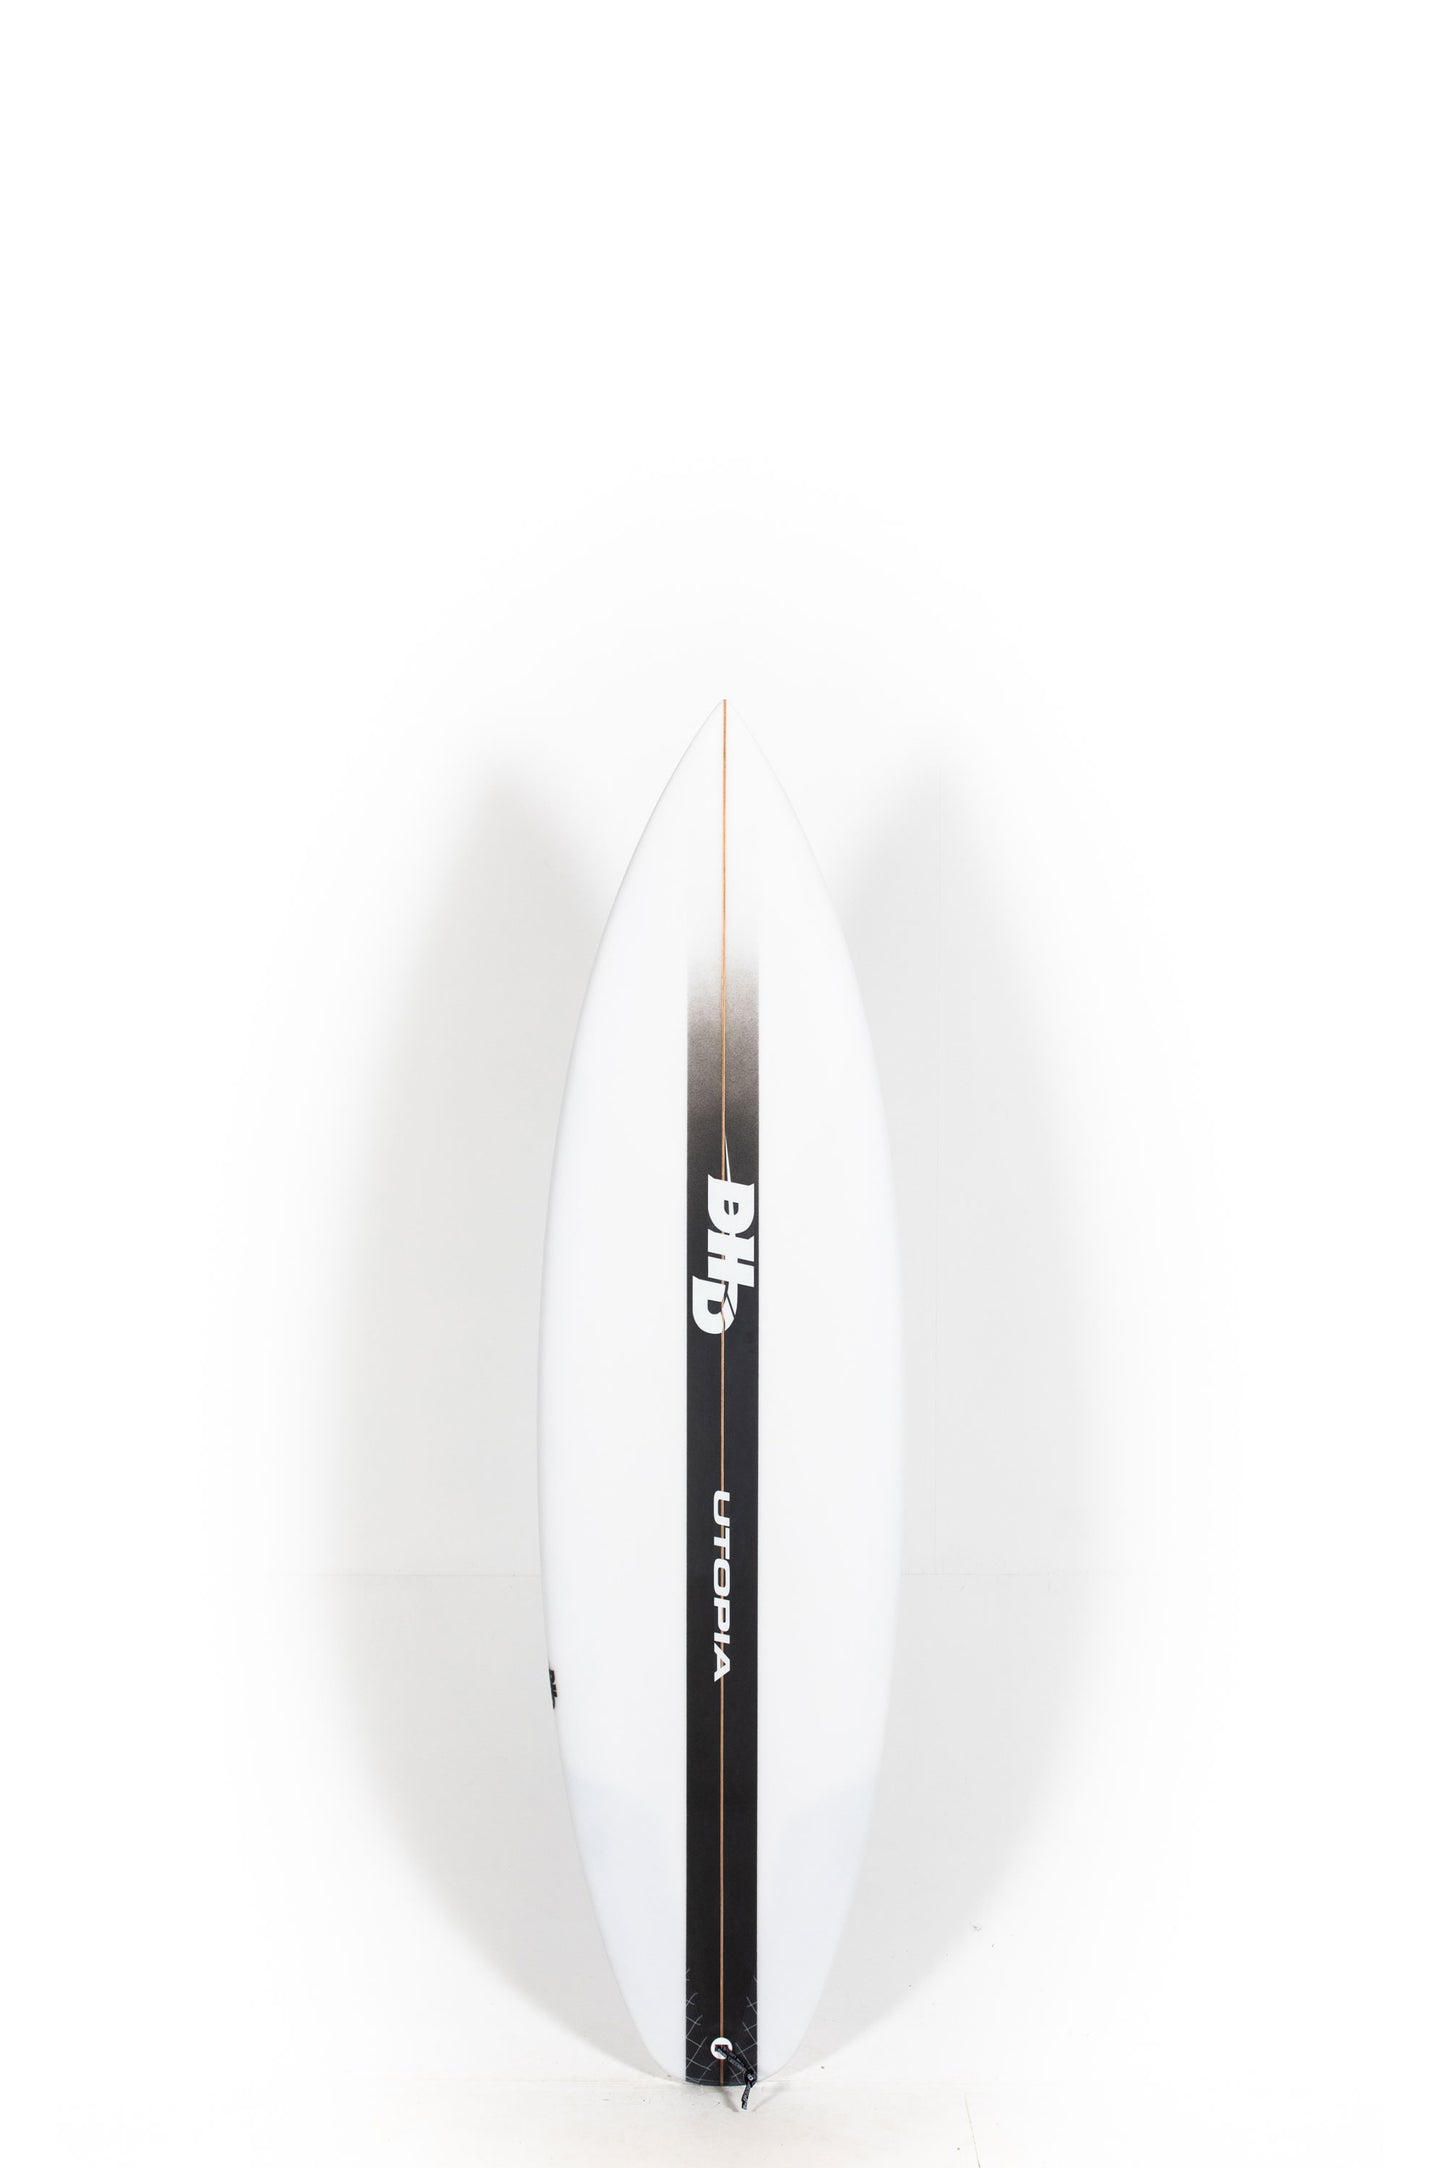 Pukas Surf Shop - DHD - UTOPIA by Darren Handley - 5'11" x 19 x 2 7/16 x 28.5L - DHDUTO511